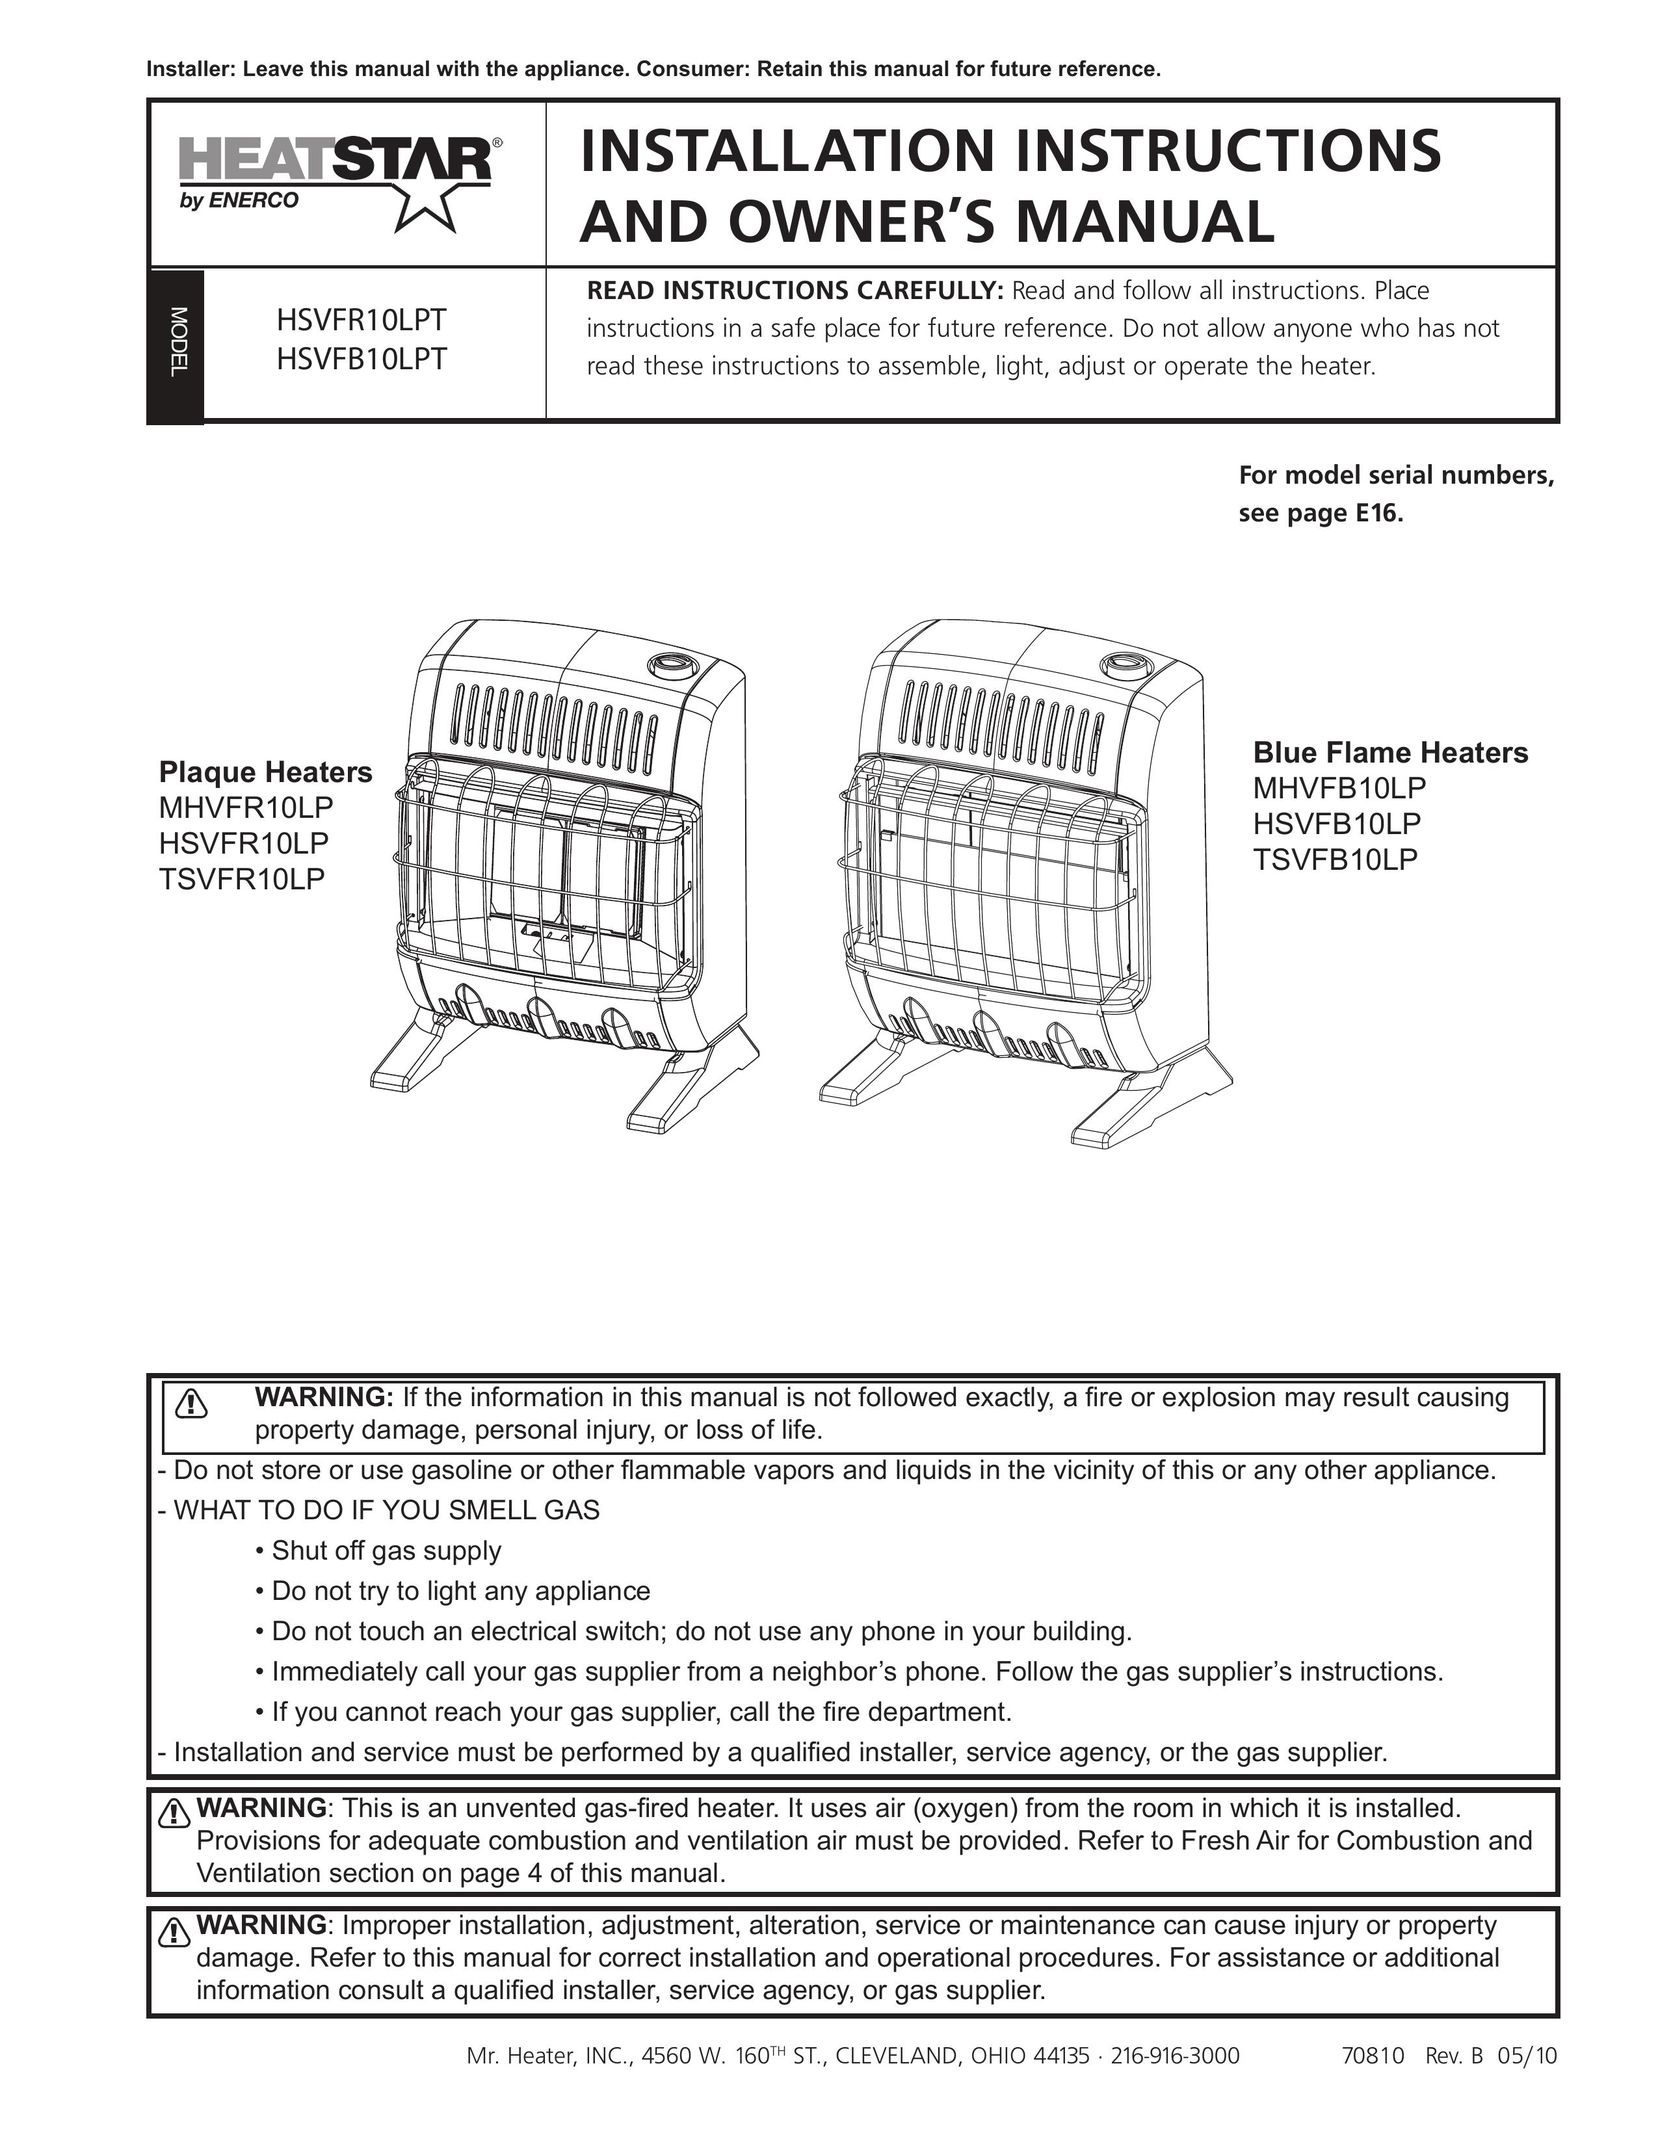 Enerco HSVFR10LPT Gas Heater User Manual